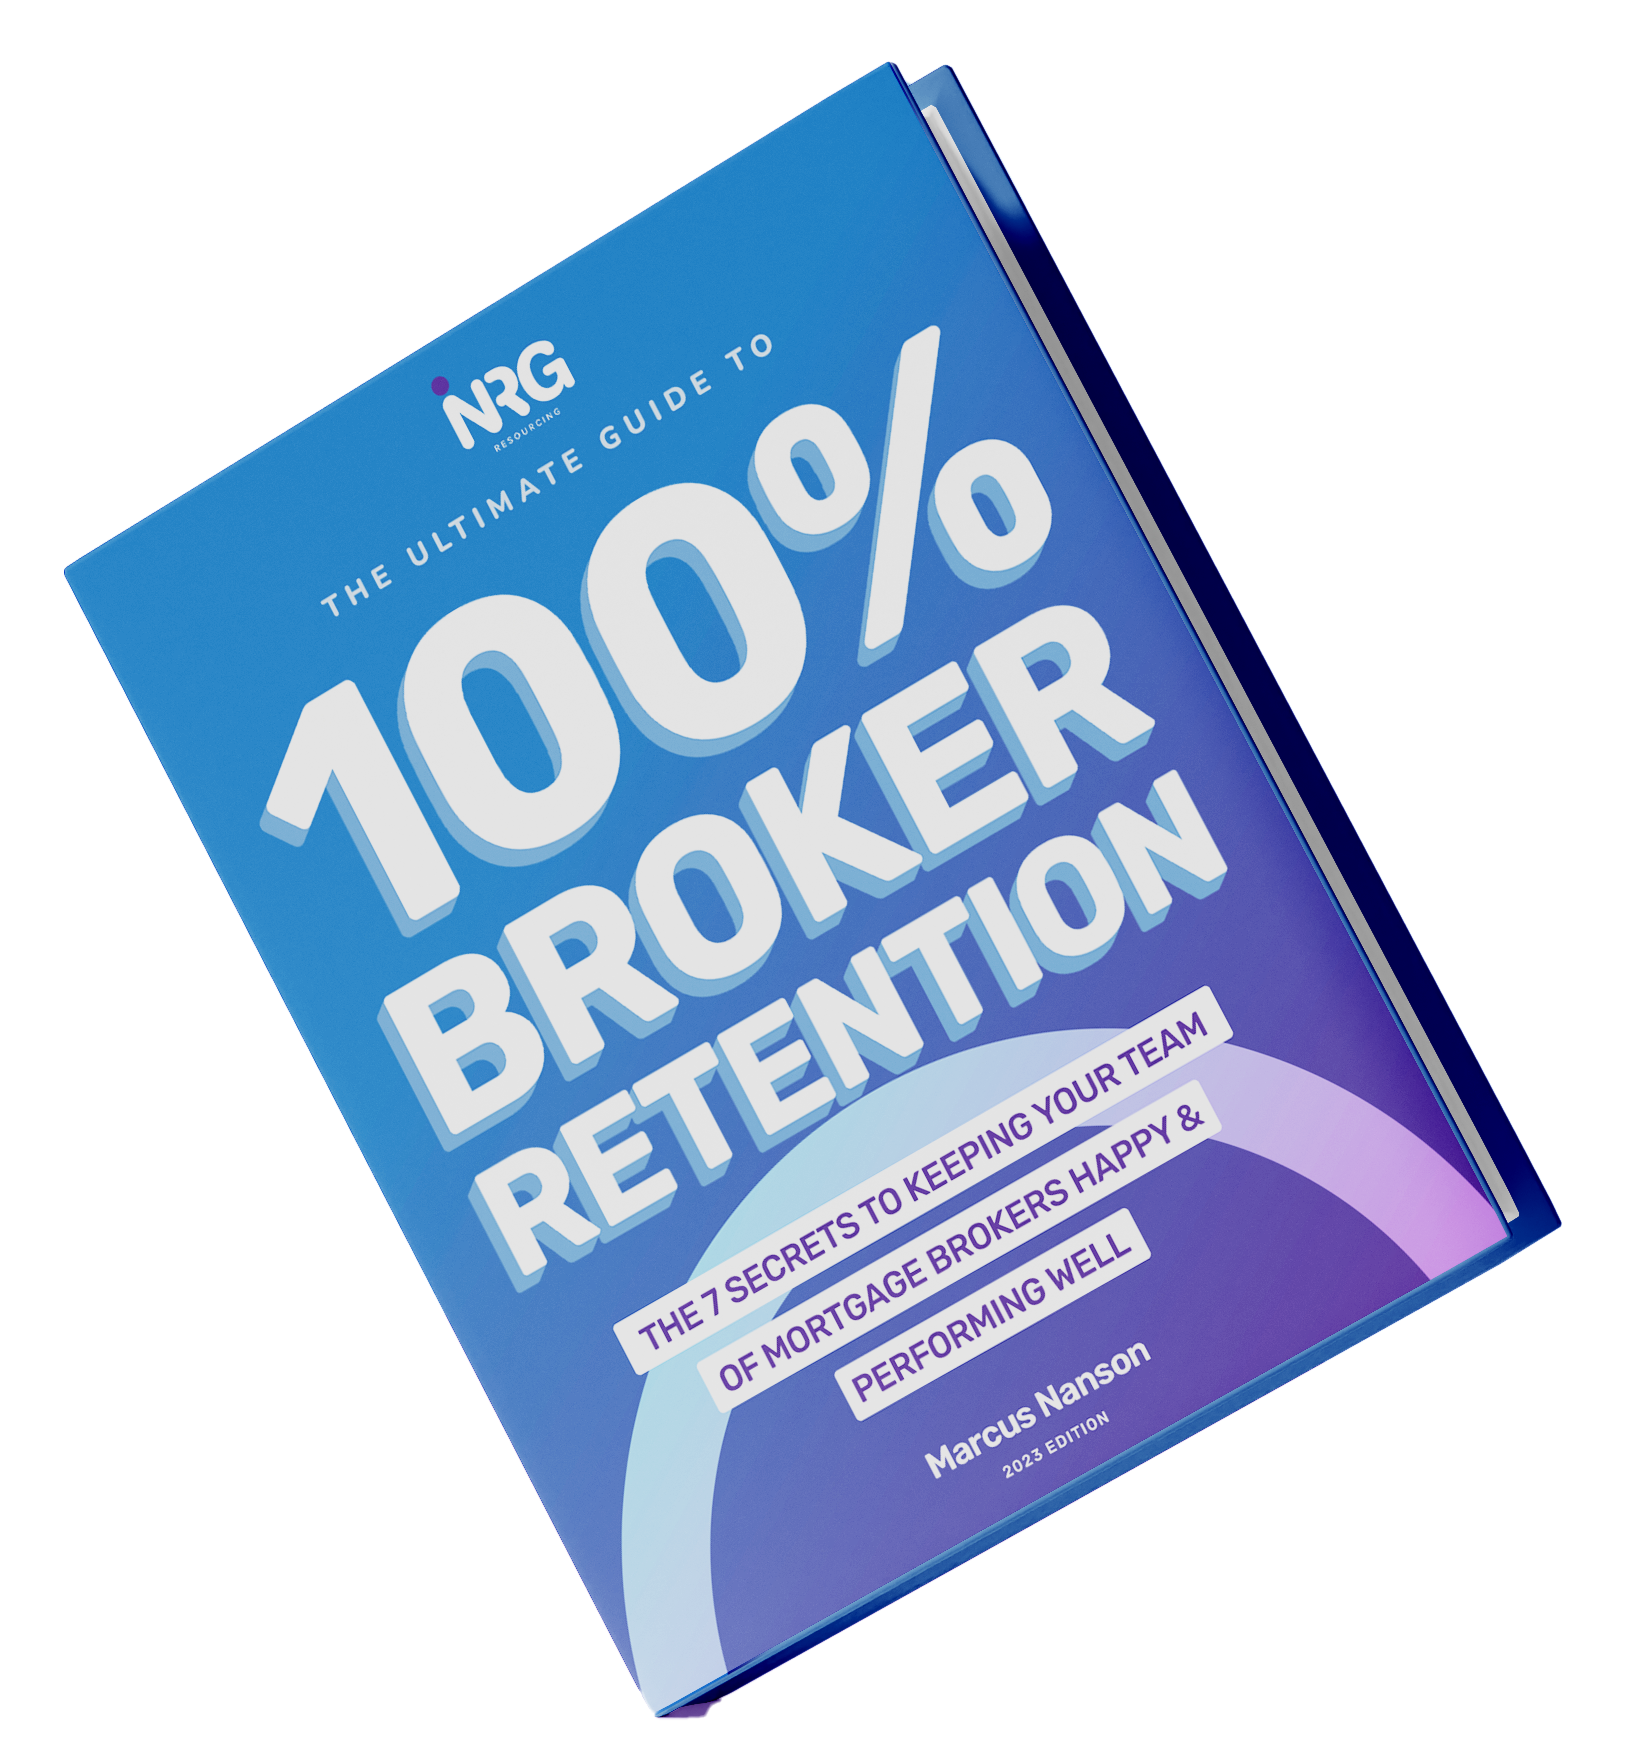 100% broker retention